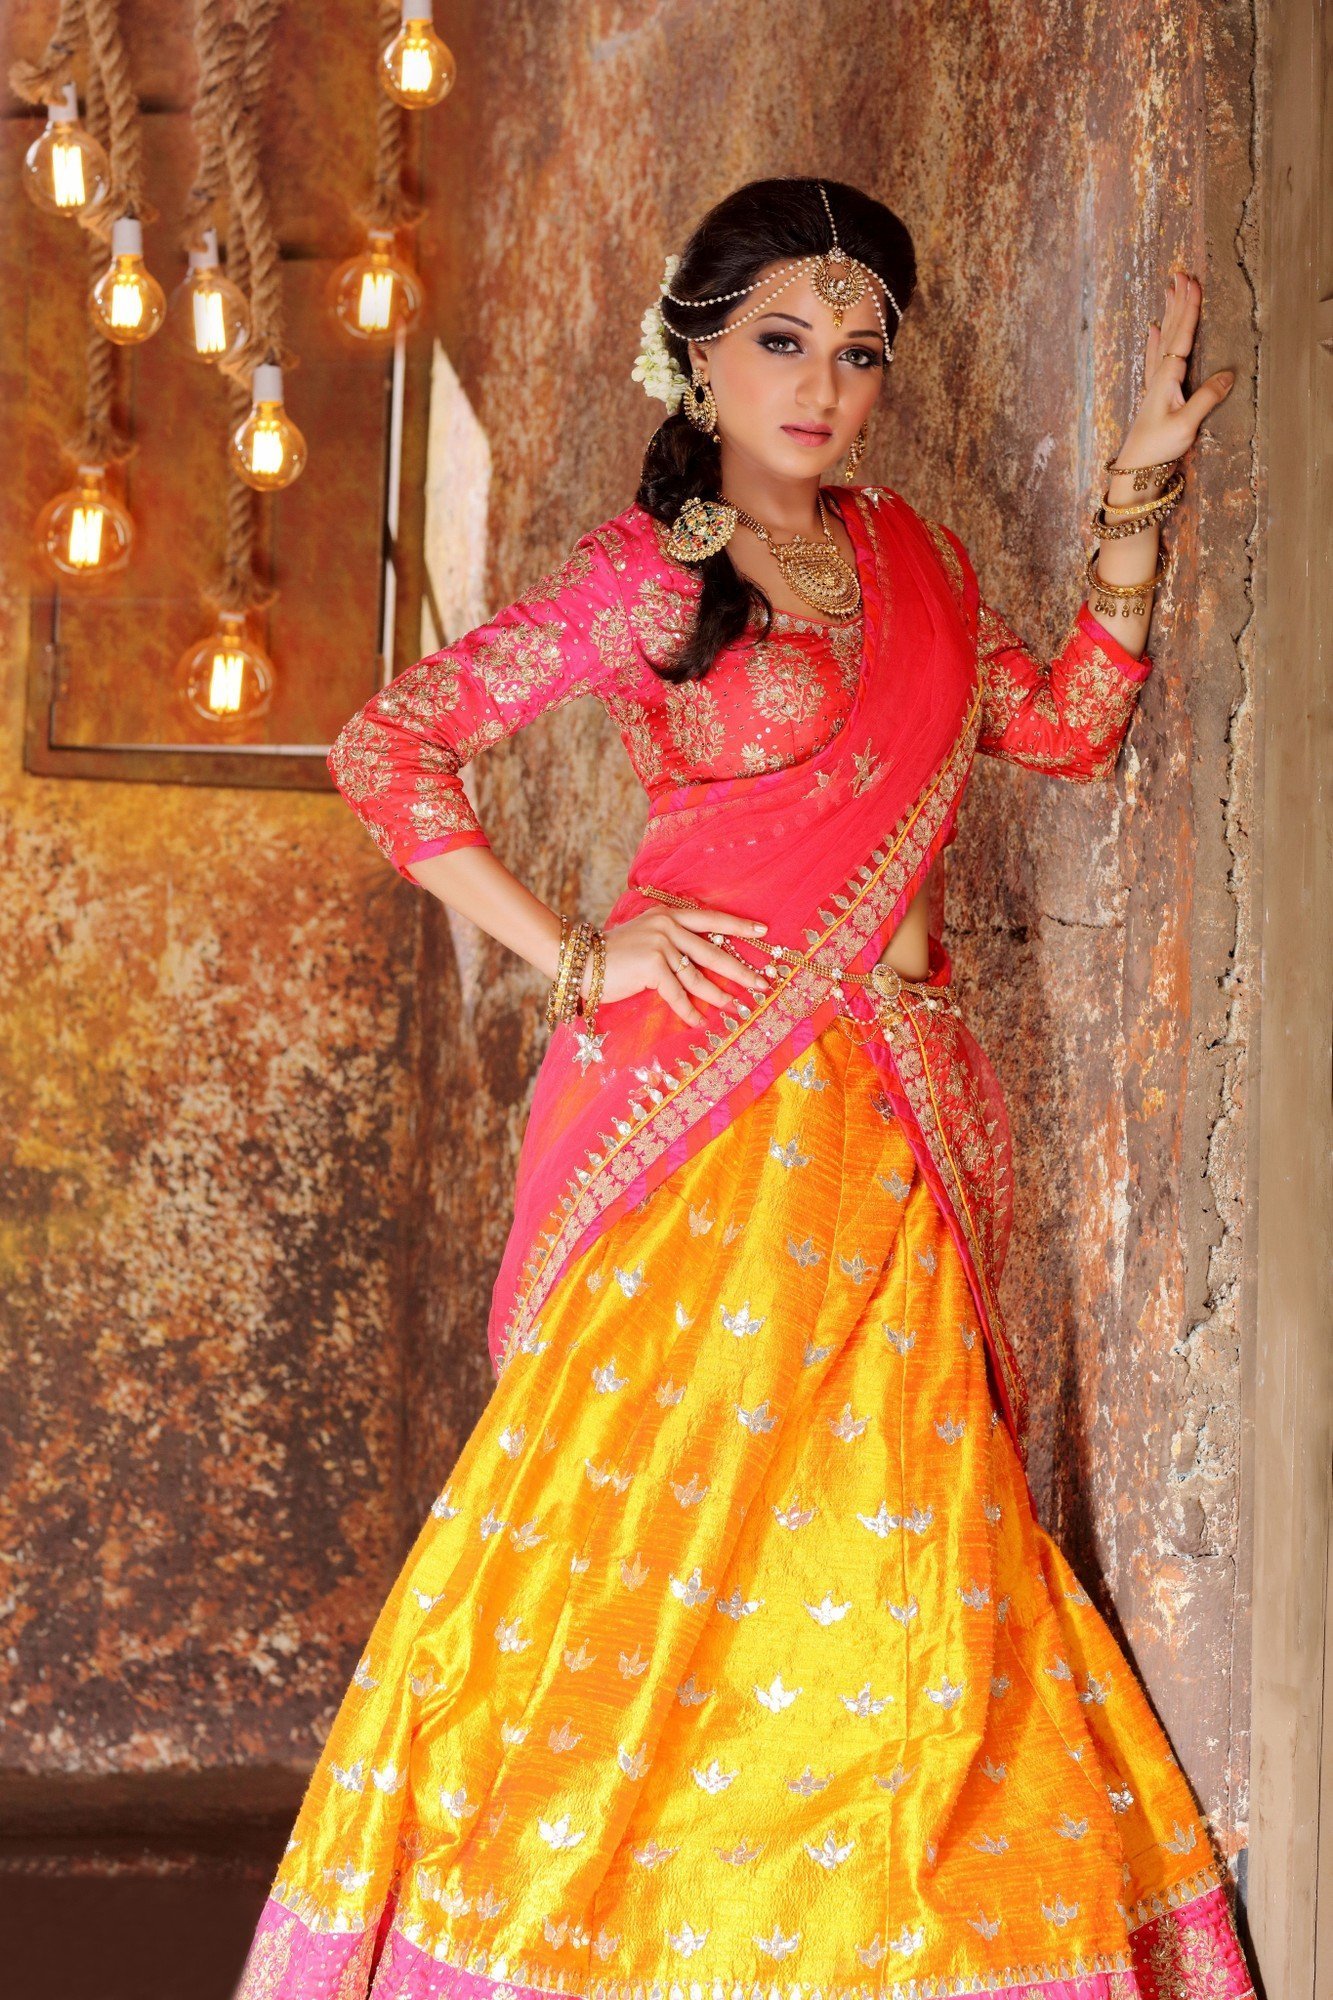 Actress Reshma Rathore in Saree Traditional Photoshoot | Picture 1524345